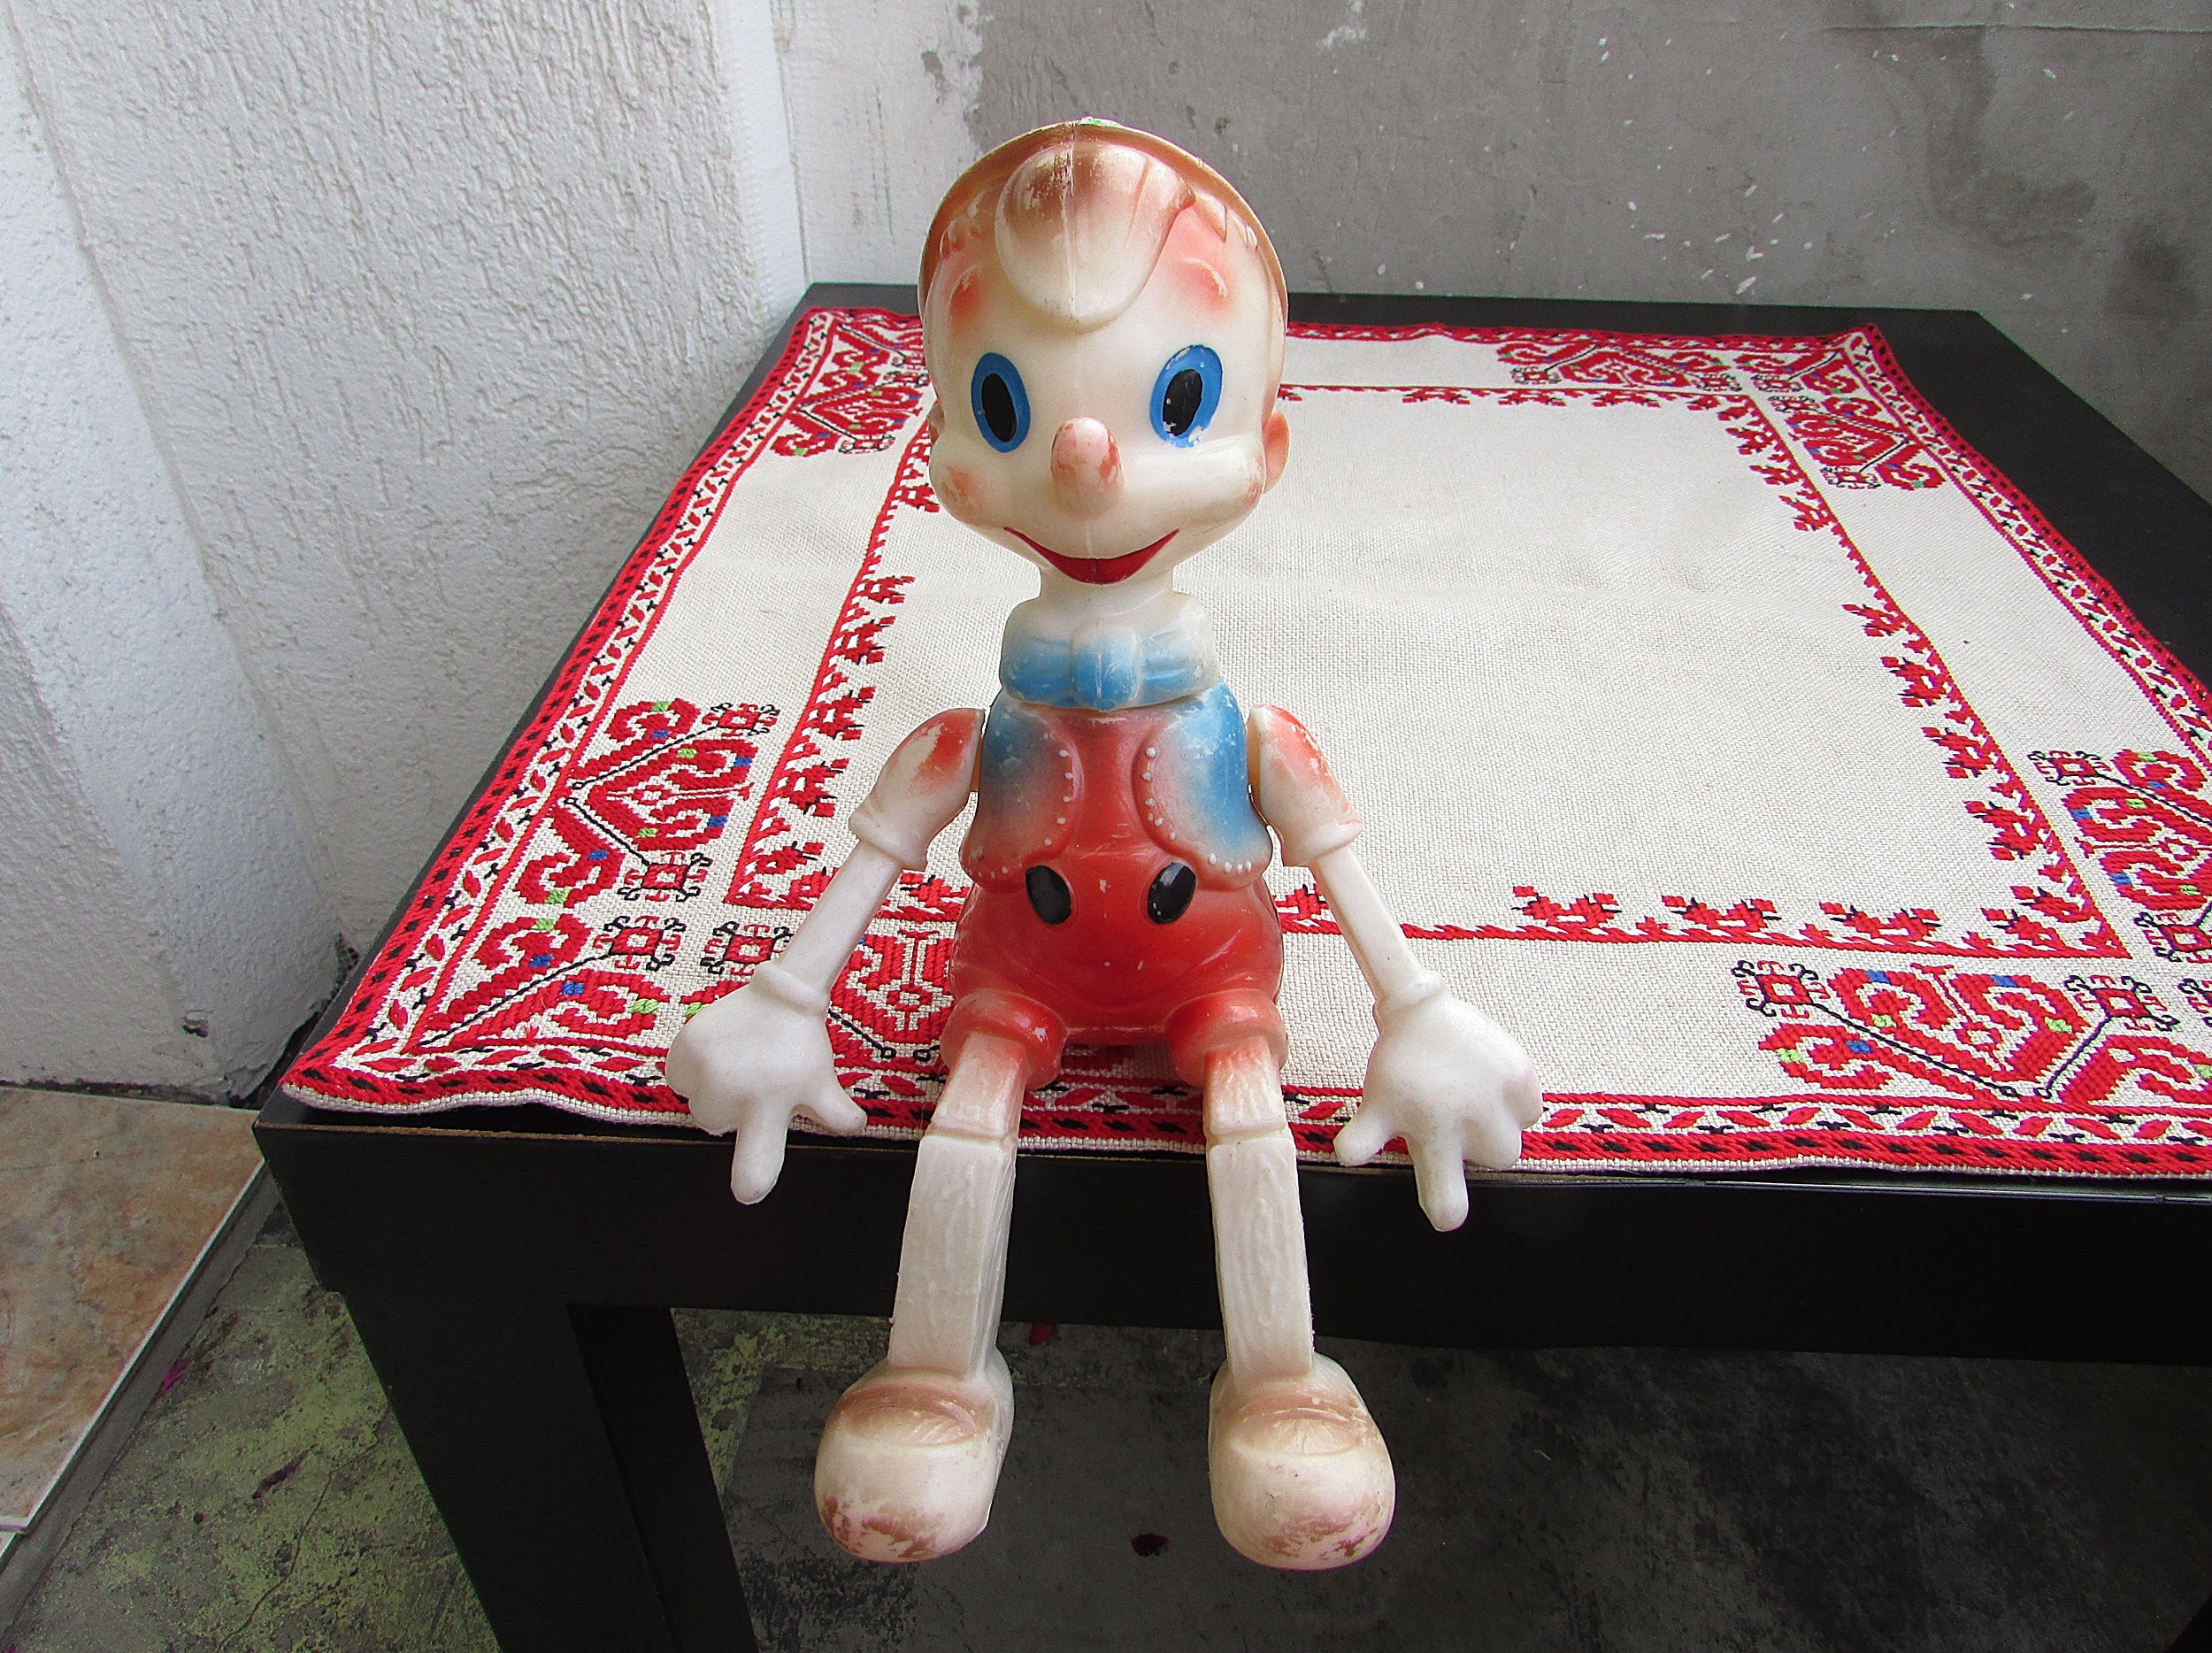 Wooden doll Pinocchio (Buratino)